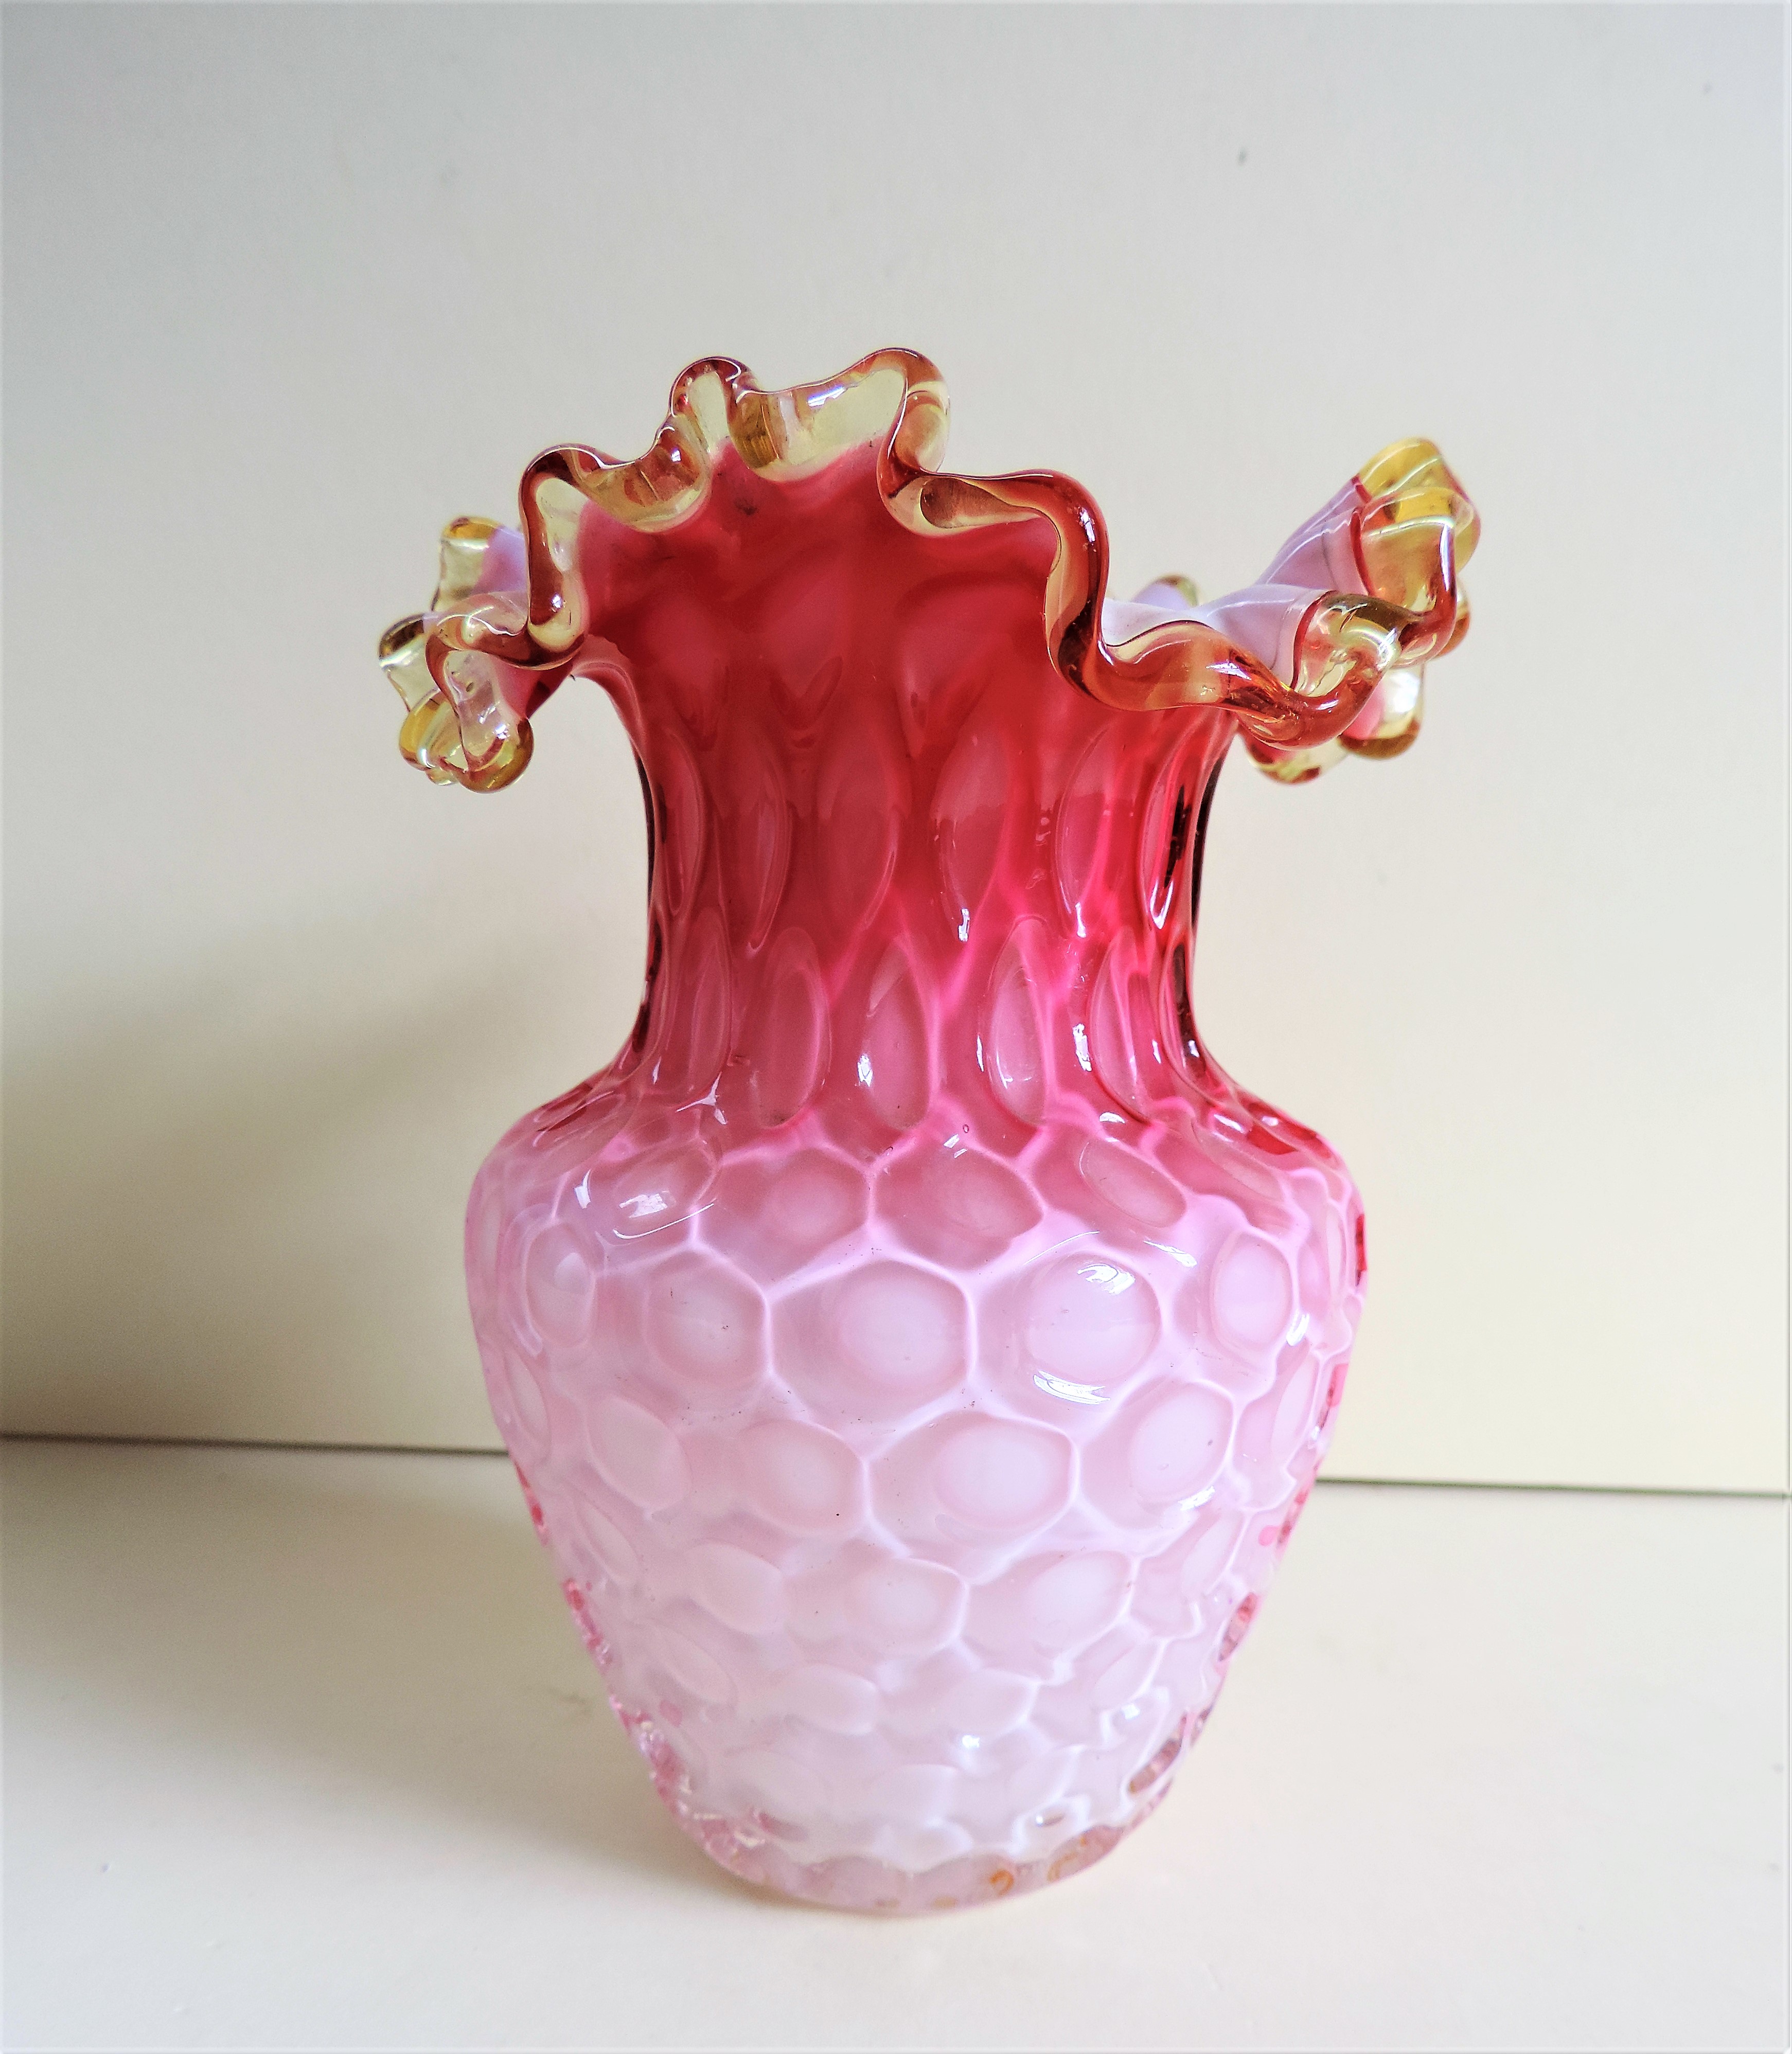 Vintage Murano Glass Vase - Image 3 of 4